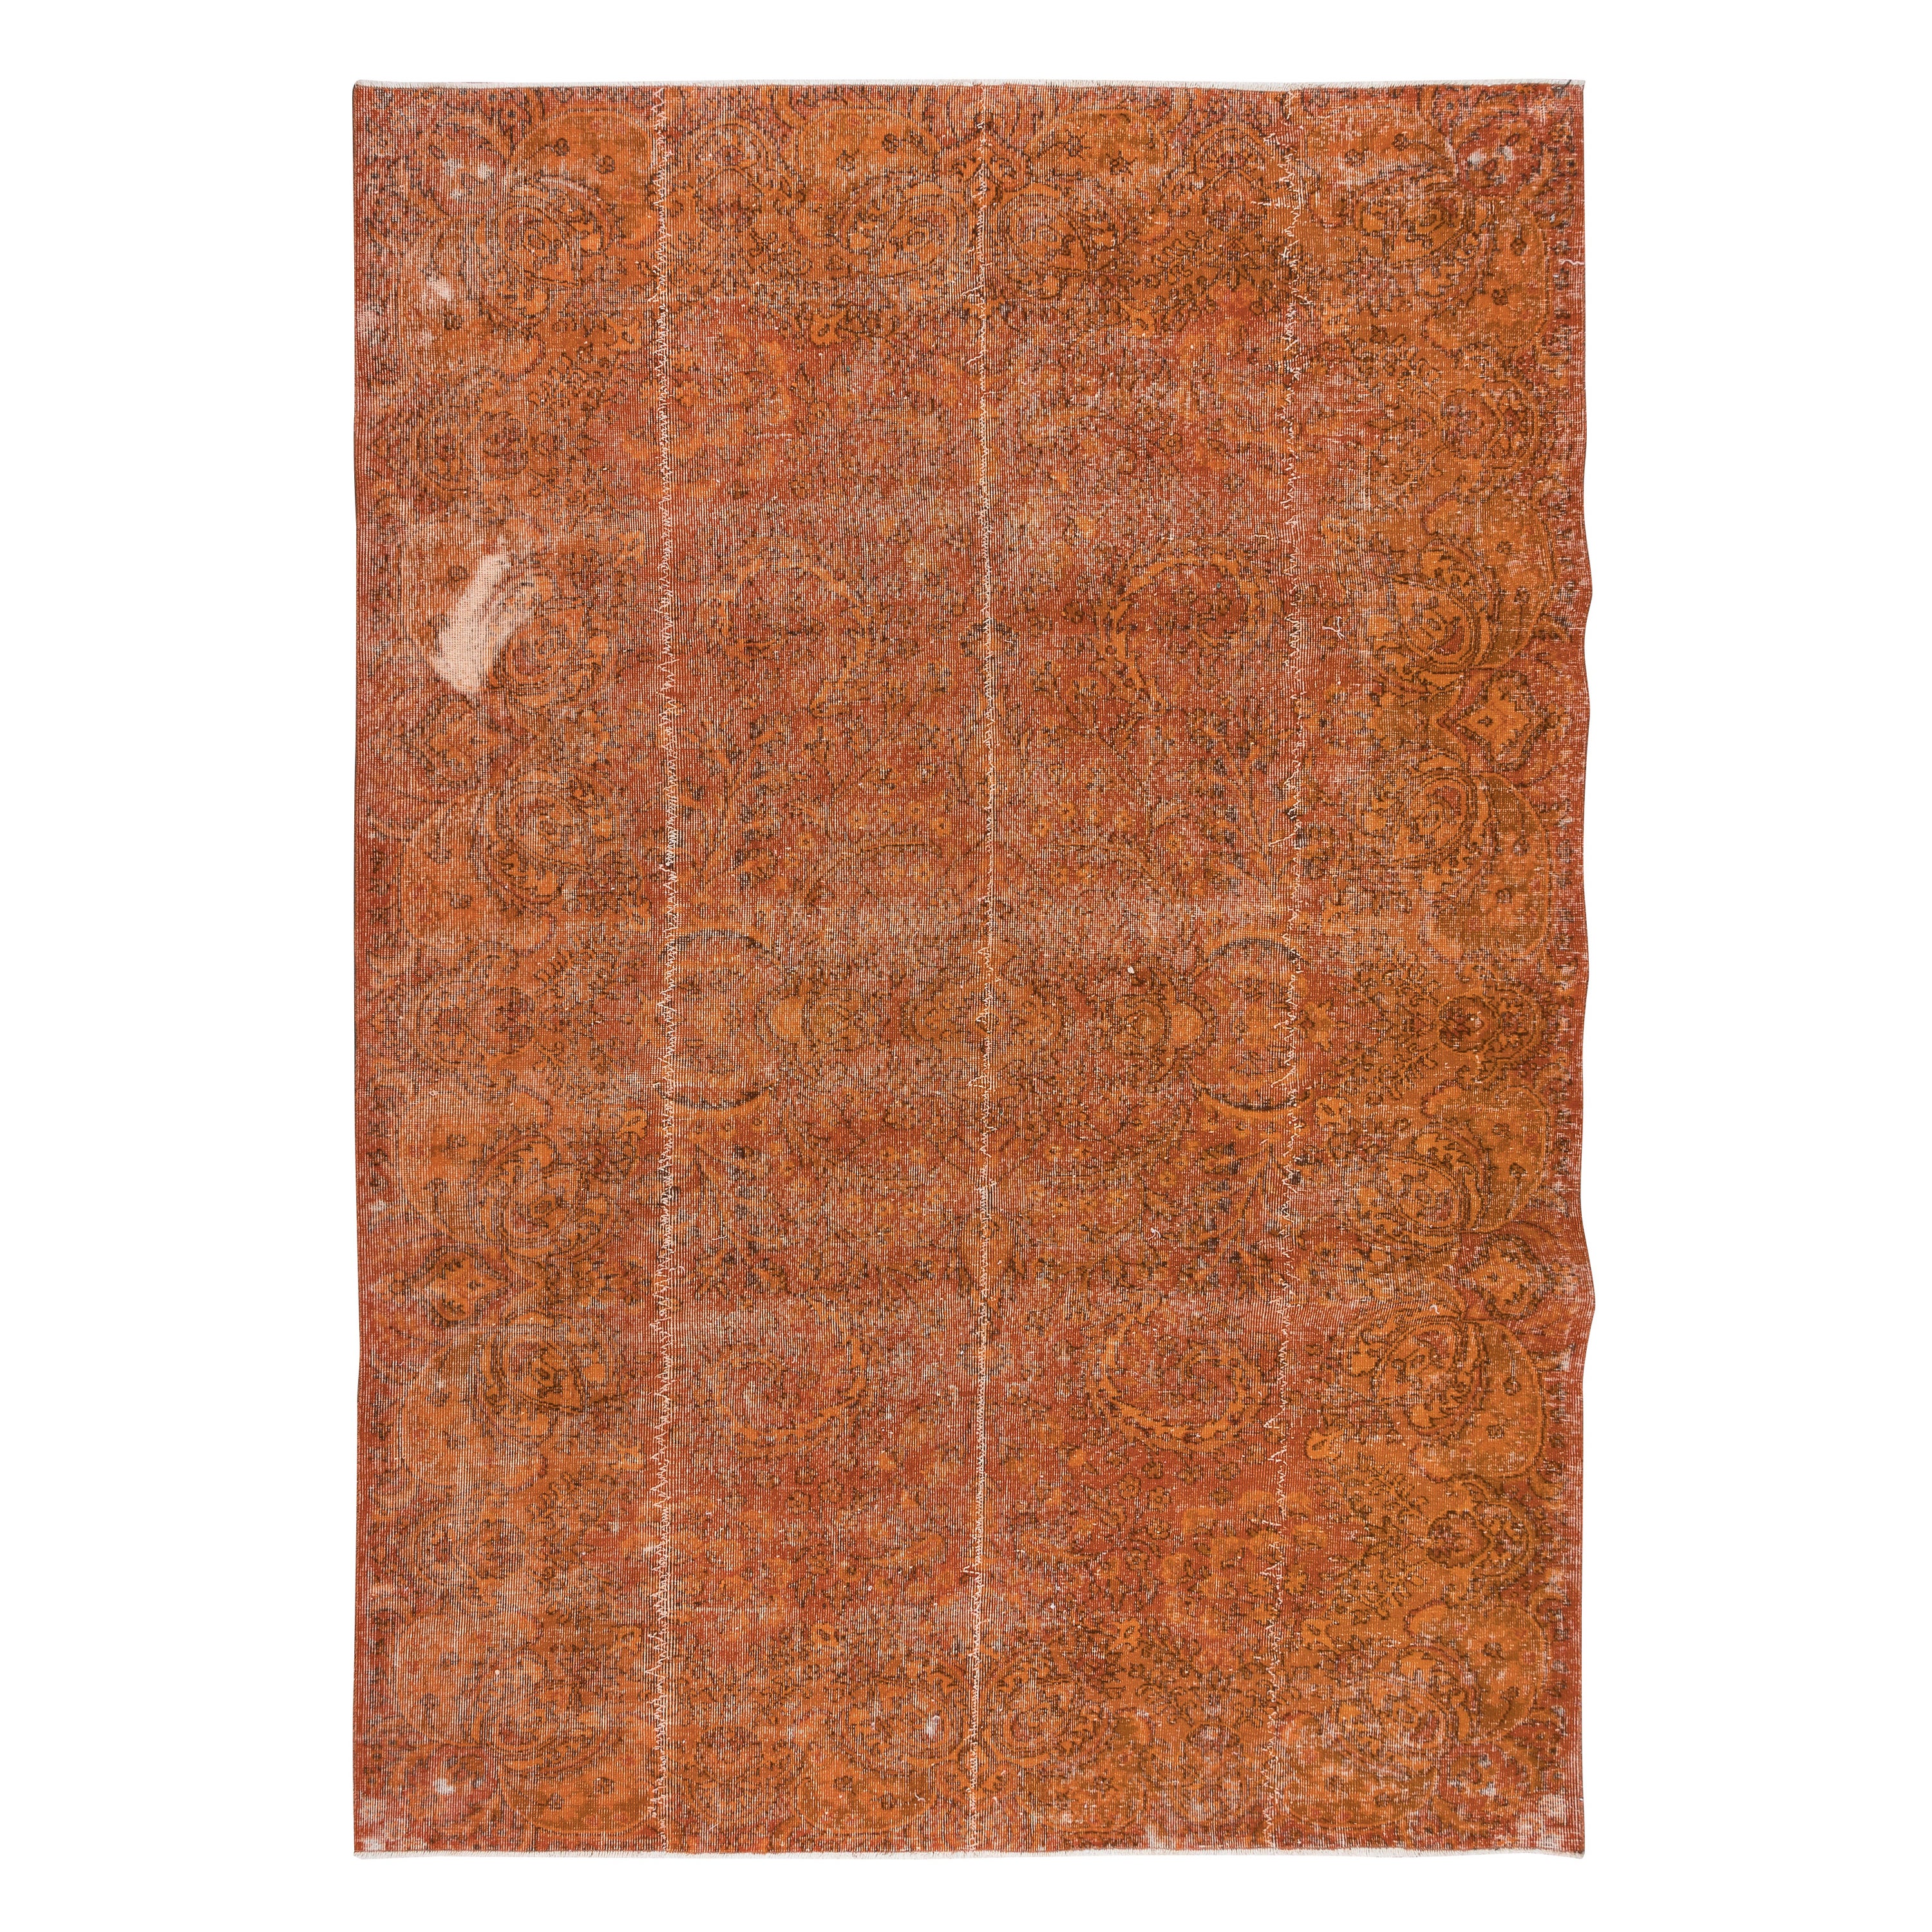 7x10 Ft Orange Handmade Area Rug, Modern Central Anatolian Wool Carpet For Sale